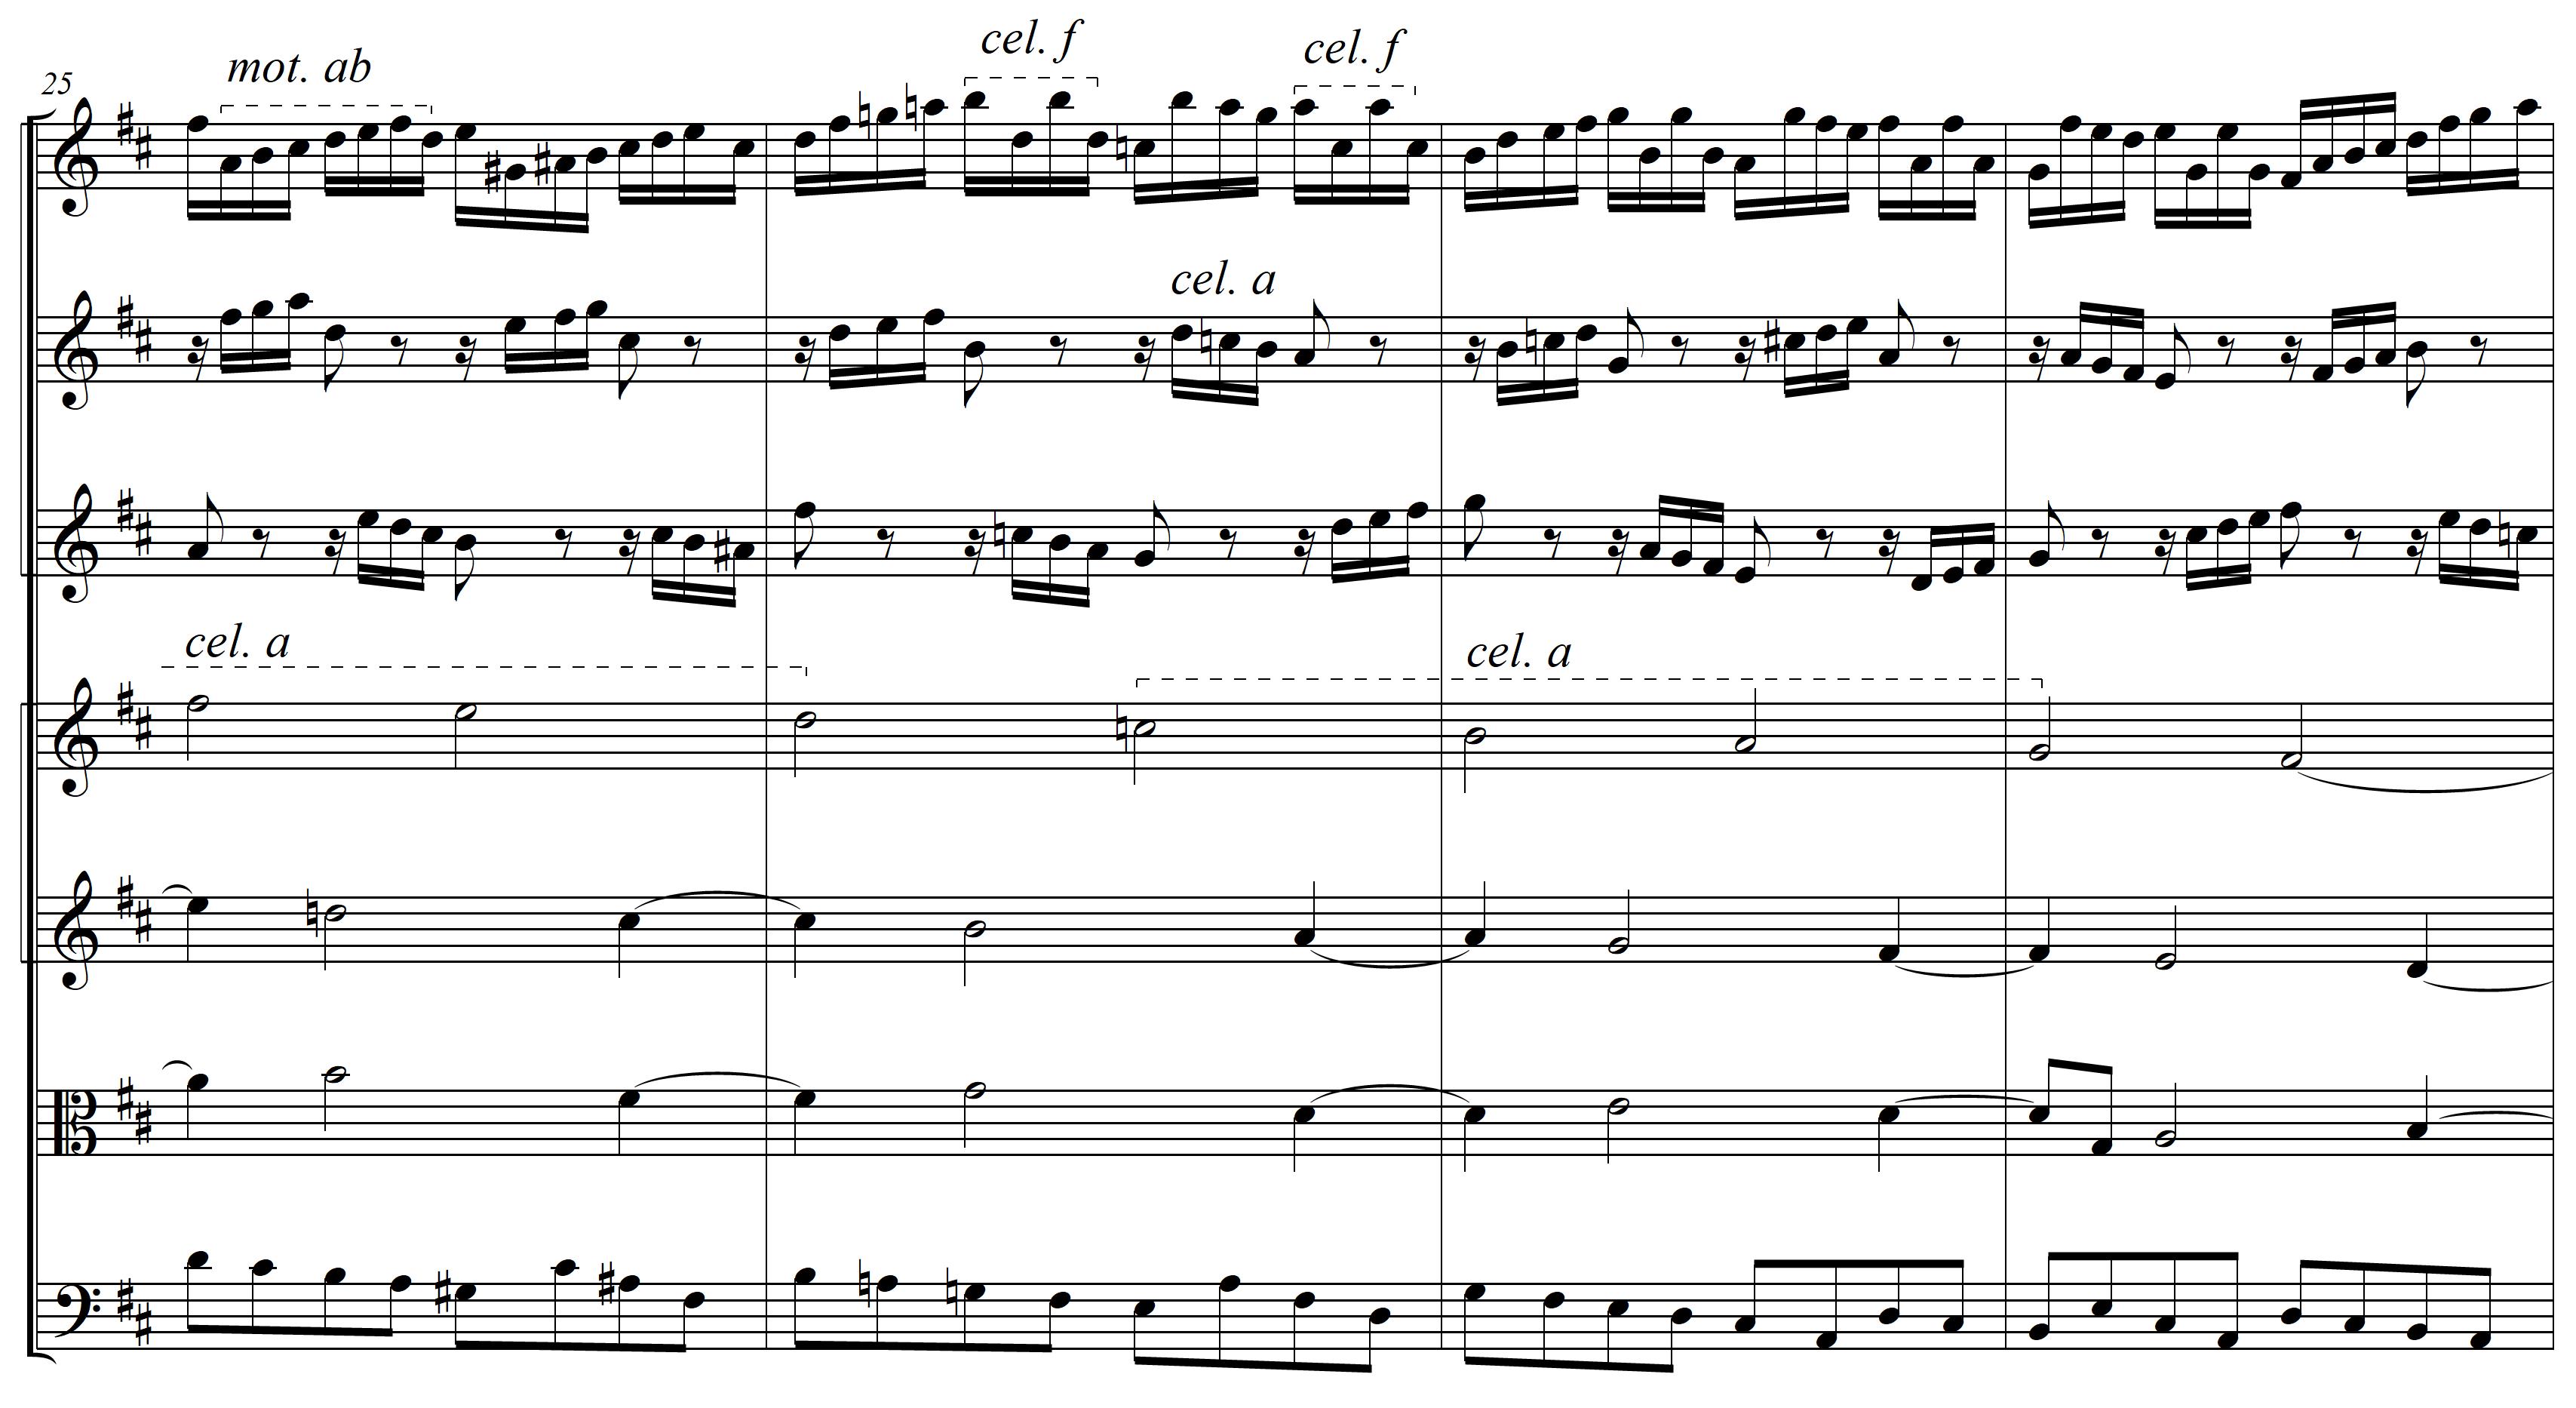 Concerto for 3 violins BWV 1064R análise e performance half 25 8